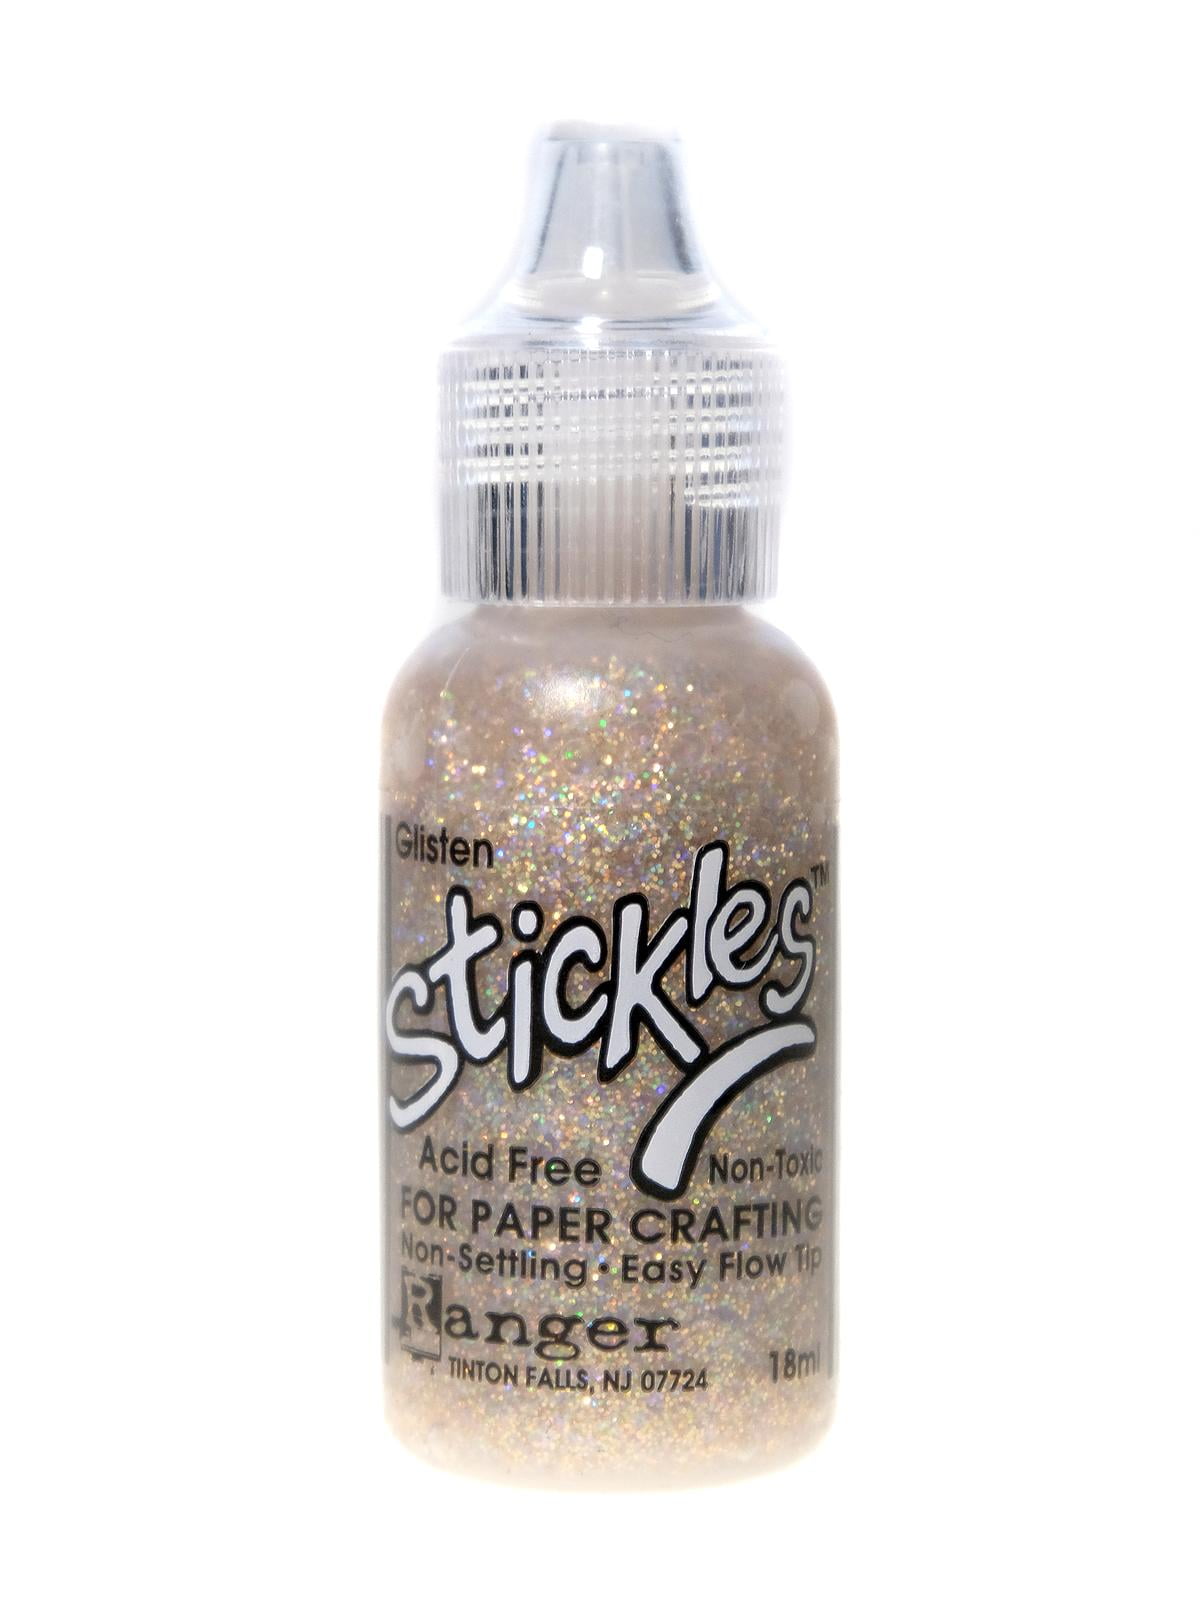 Stickles Glitter Glue sandstone, 0.5 oz., bottle (pack of 6) 